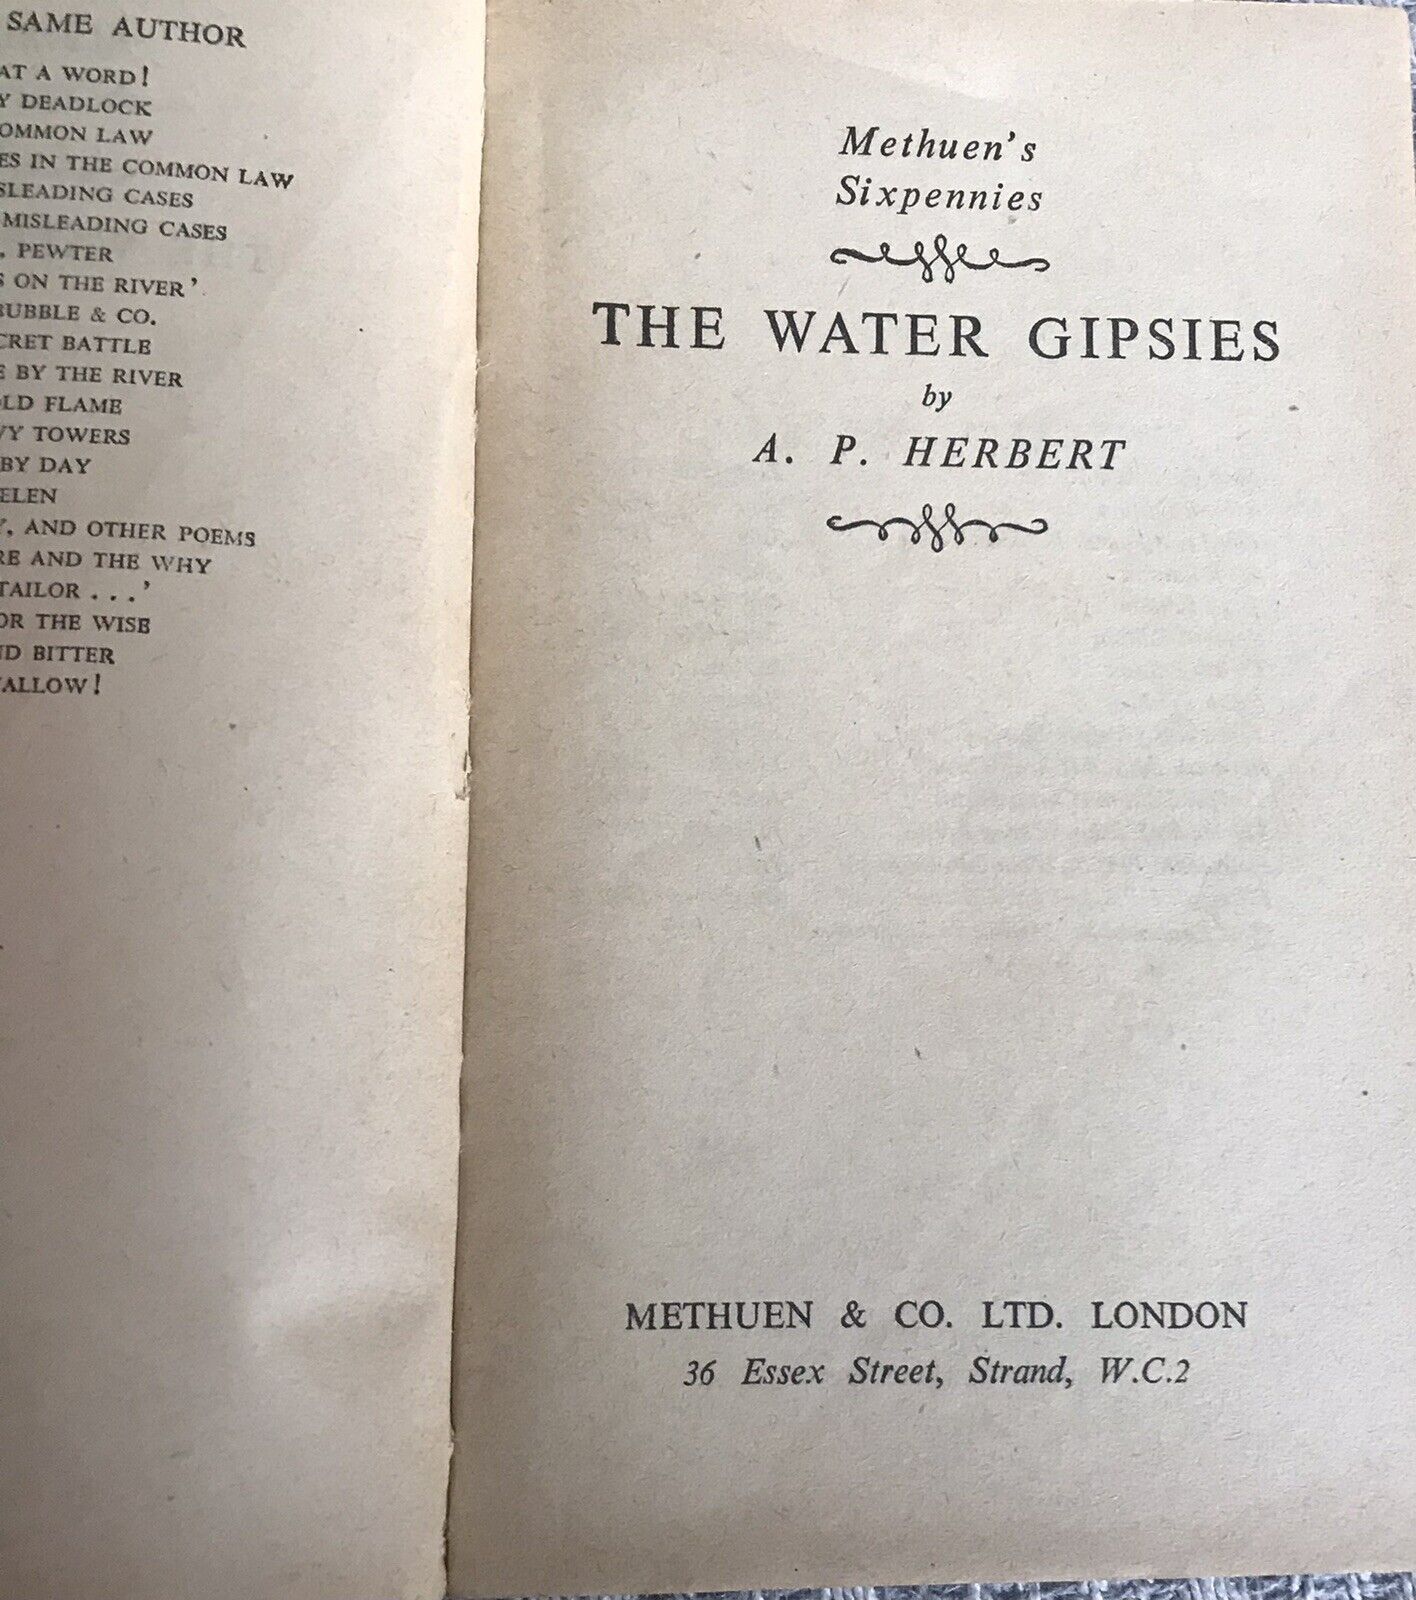 1939 The Water Gipsies - A.P. Herbert(Methuen Sixpennies) Honeyburn Books (UK)